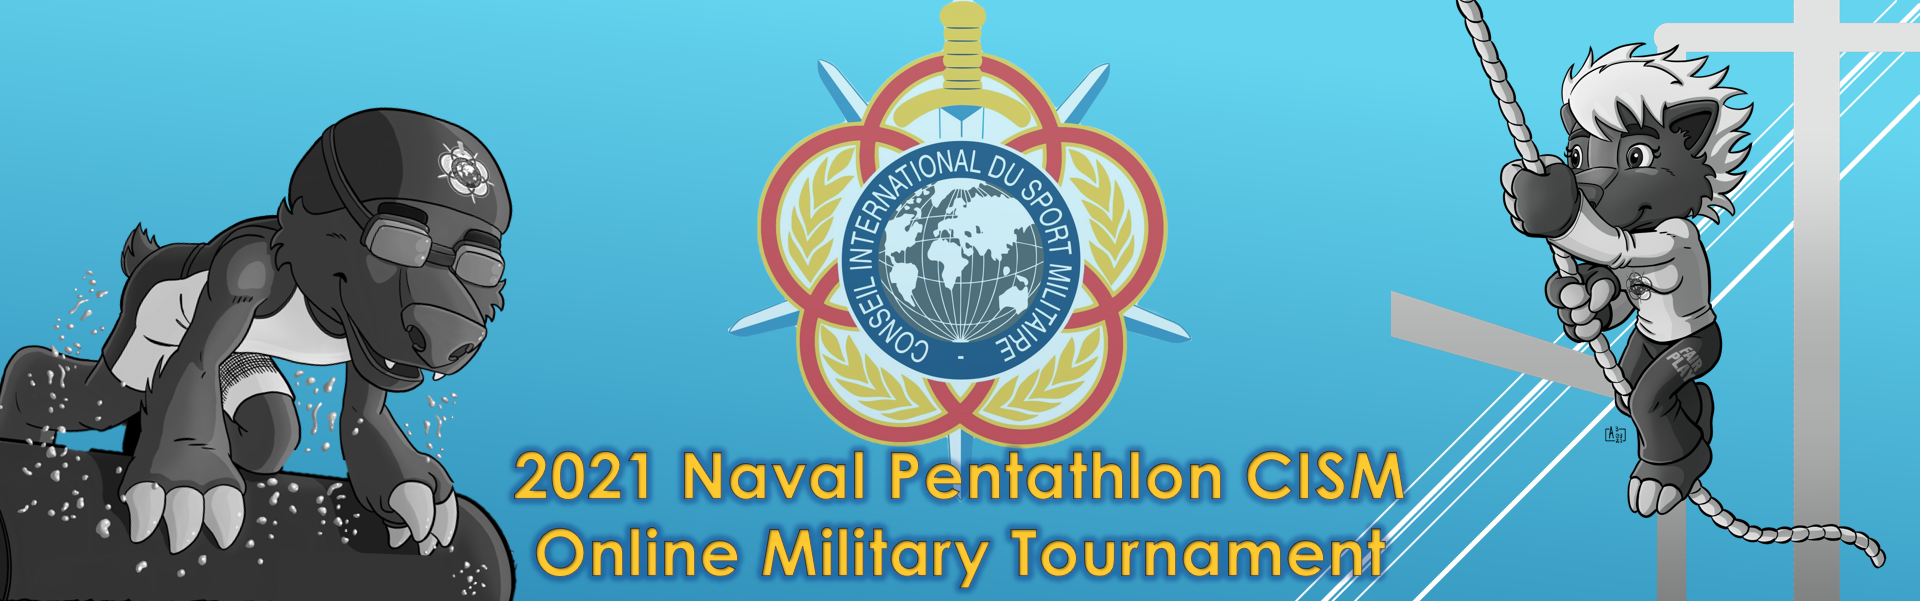 Logo   2021 Naval Pentathlon CISM Online Military Tournament.1